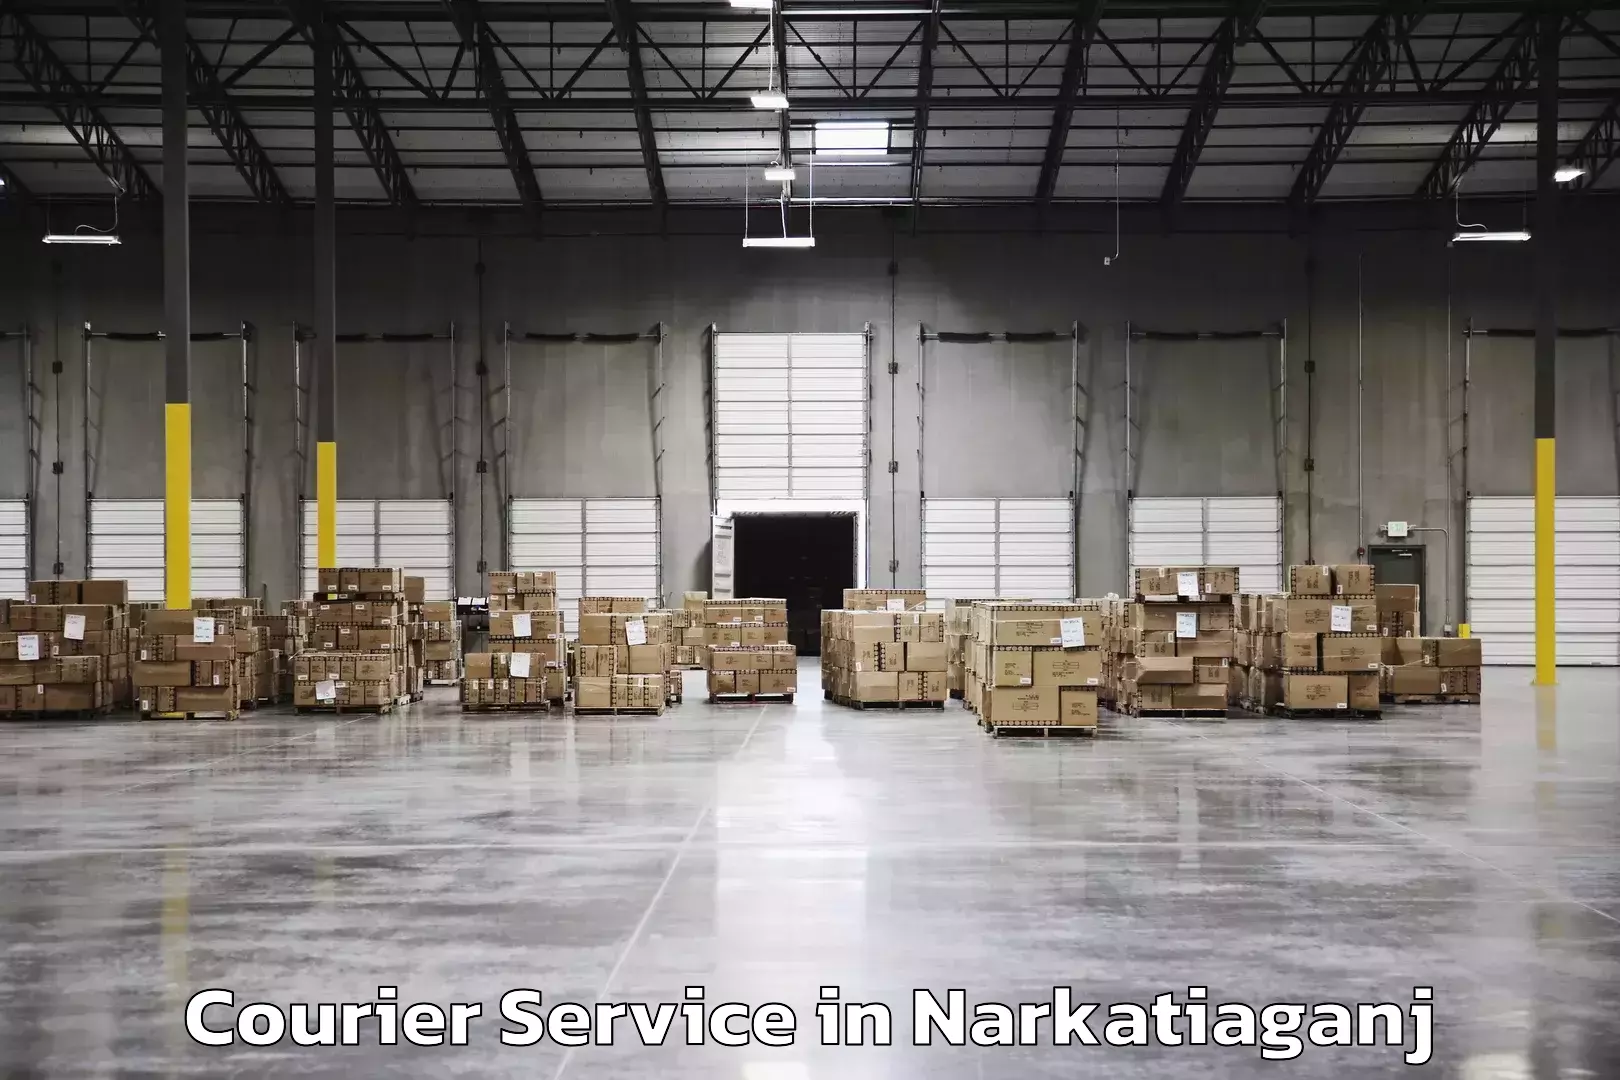 Express package handling in Narkatiaganj